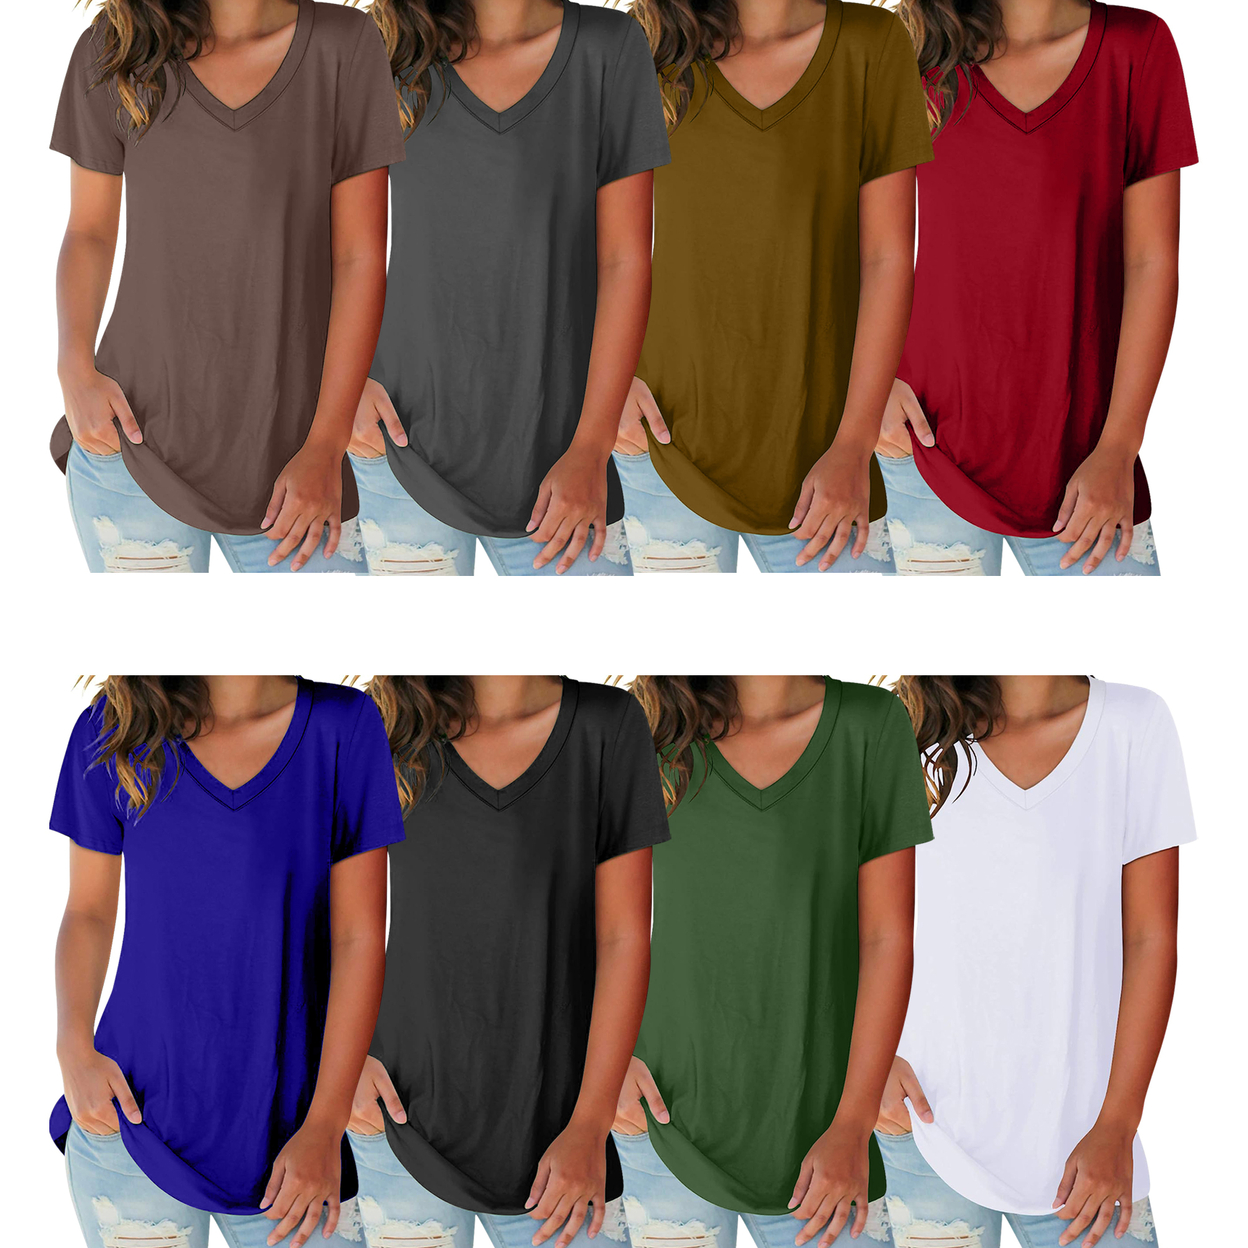 3-Pack: Women's Ultra Soft Smooth Cotton Blend Basic V-Neck Short Sleeve Shirts - Black, Navy, Grey, Small